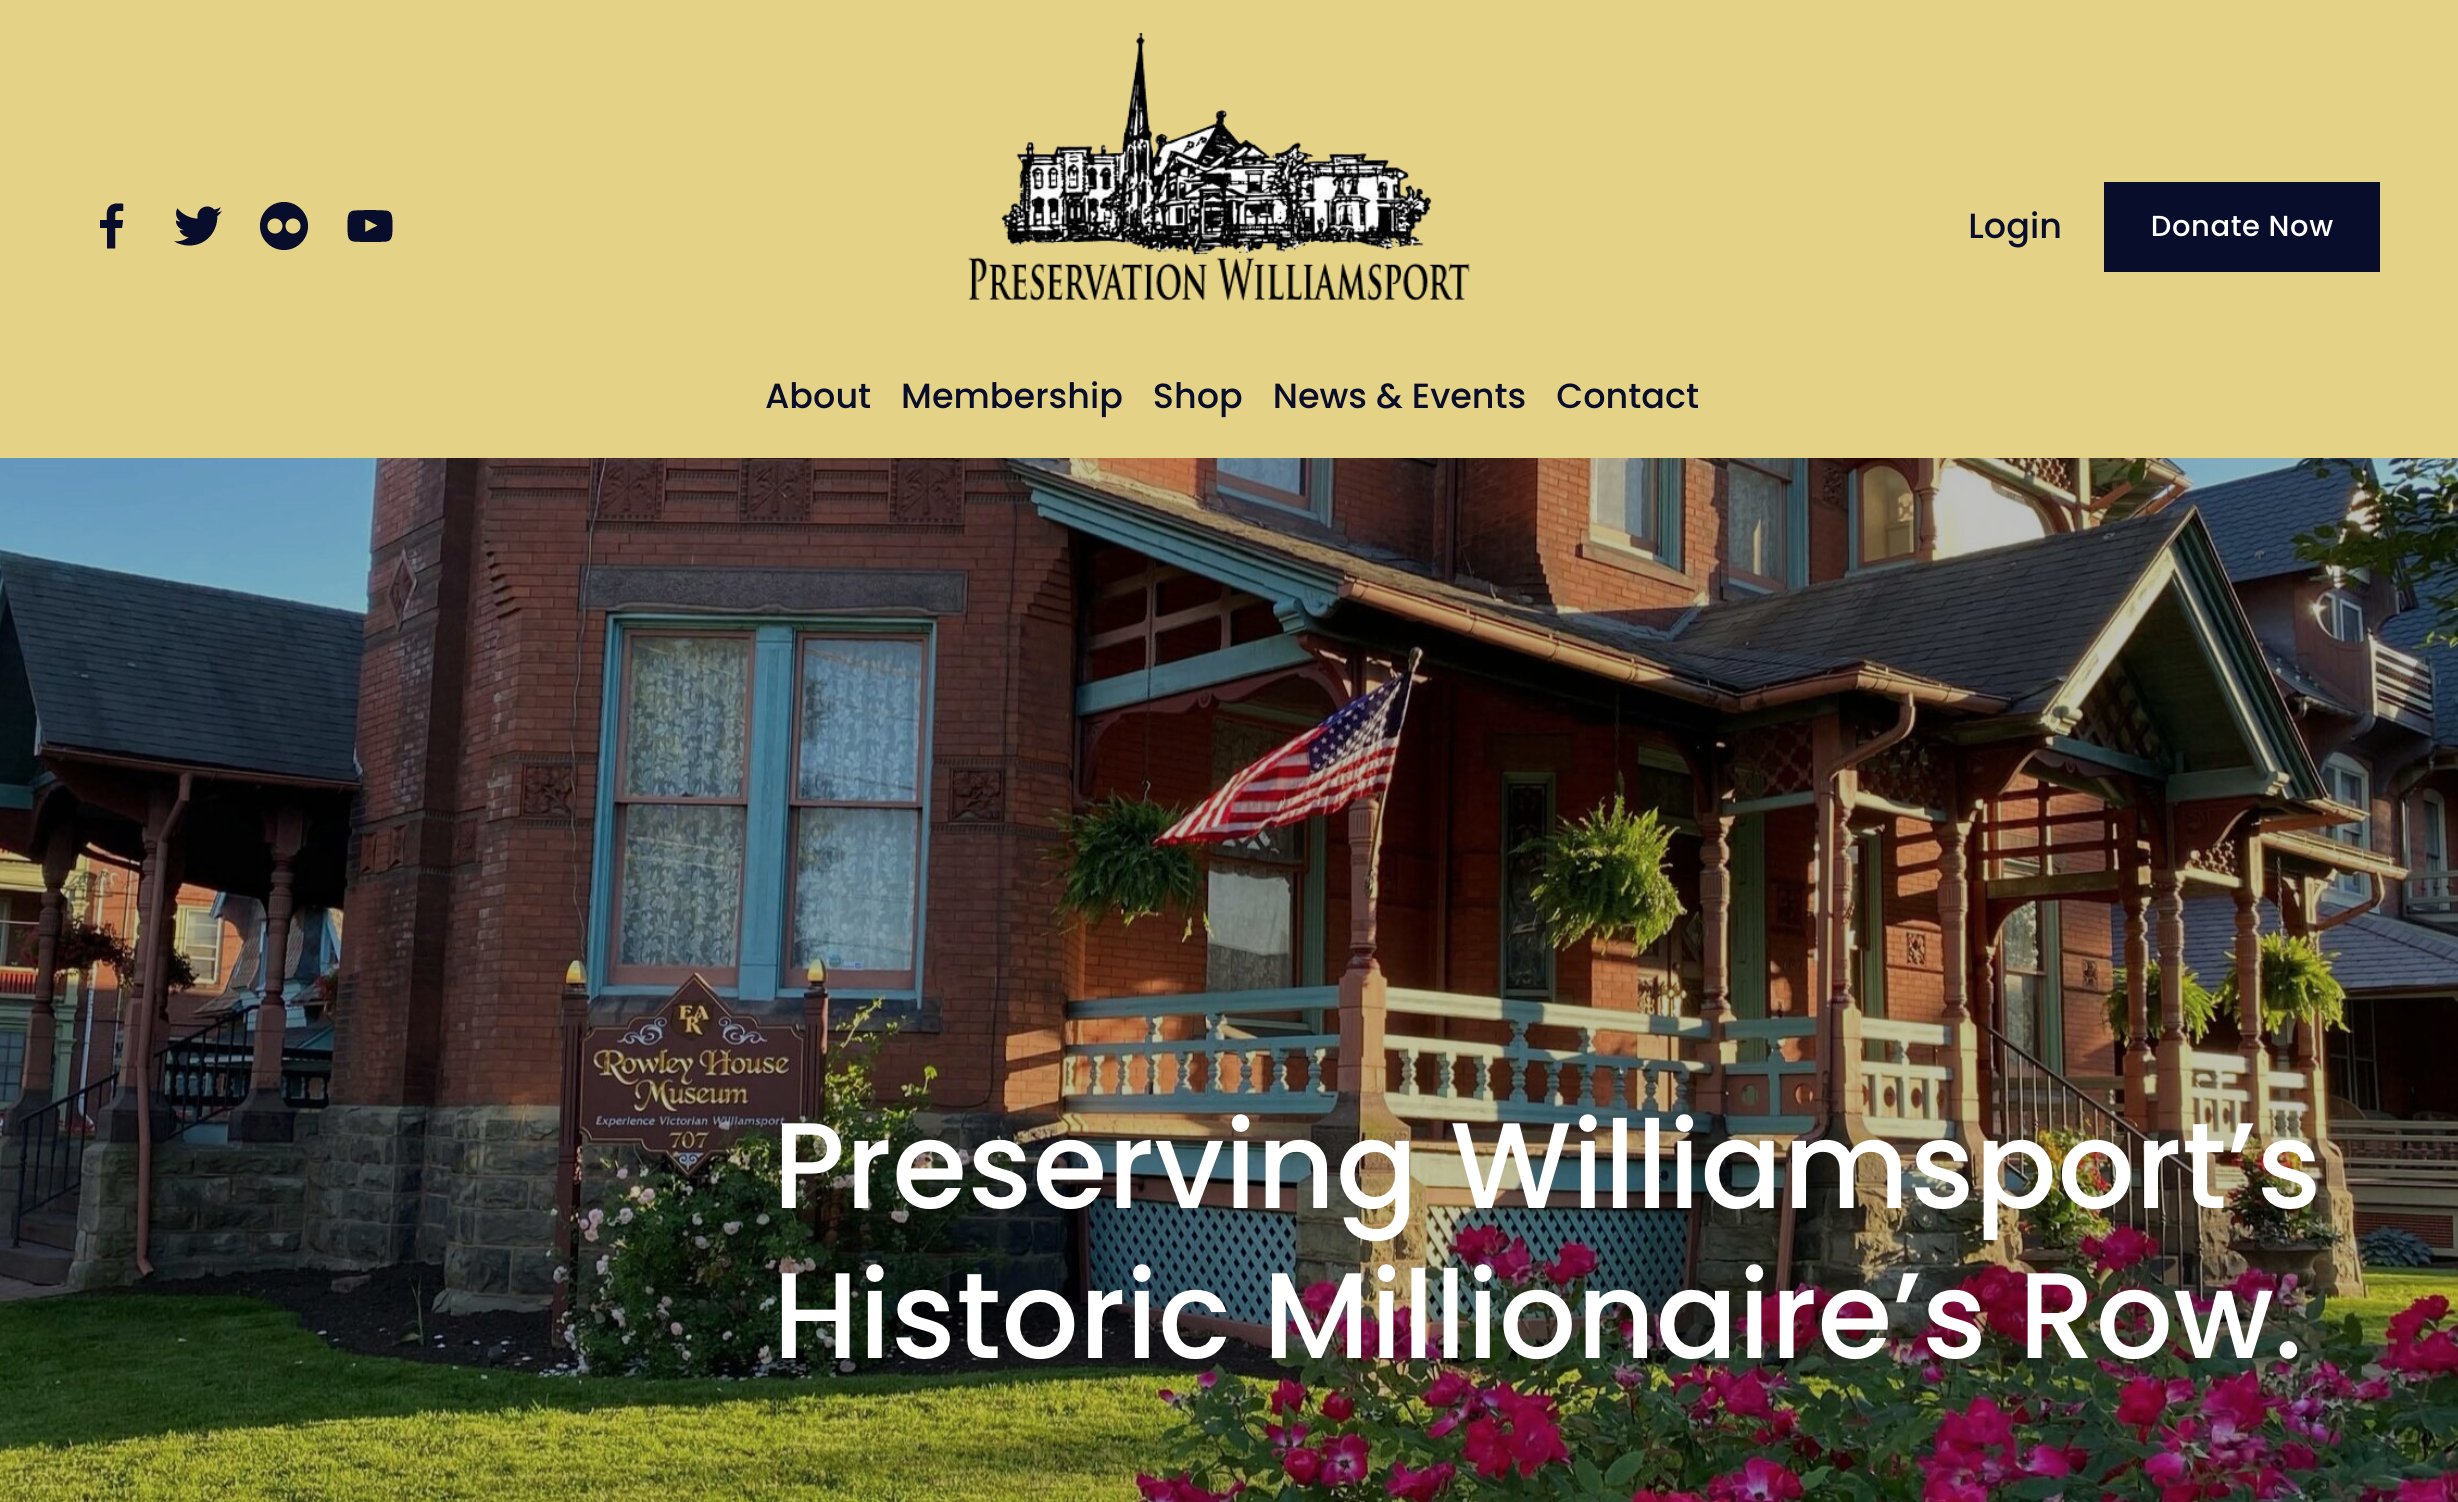 Preservation Williamsport